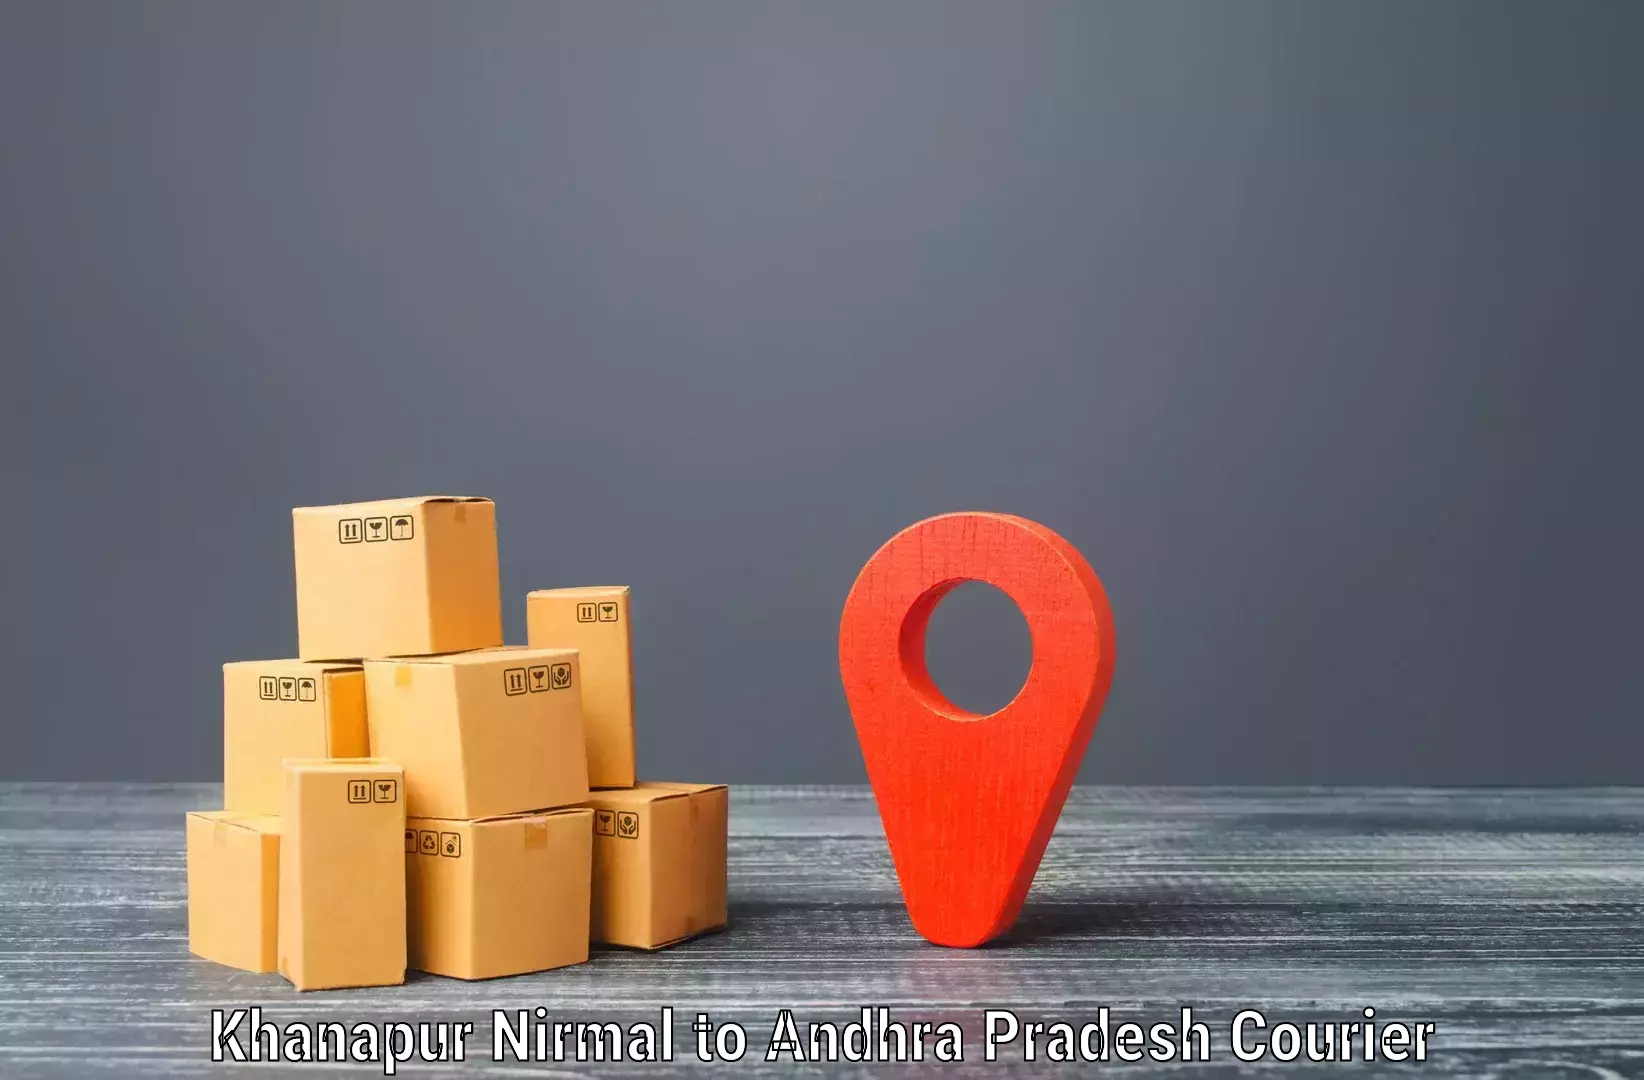 Affordable parcel service Khanapur Nirmal to Vuyyuru